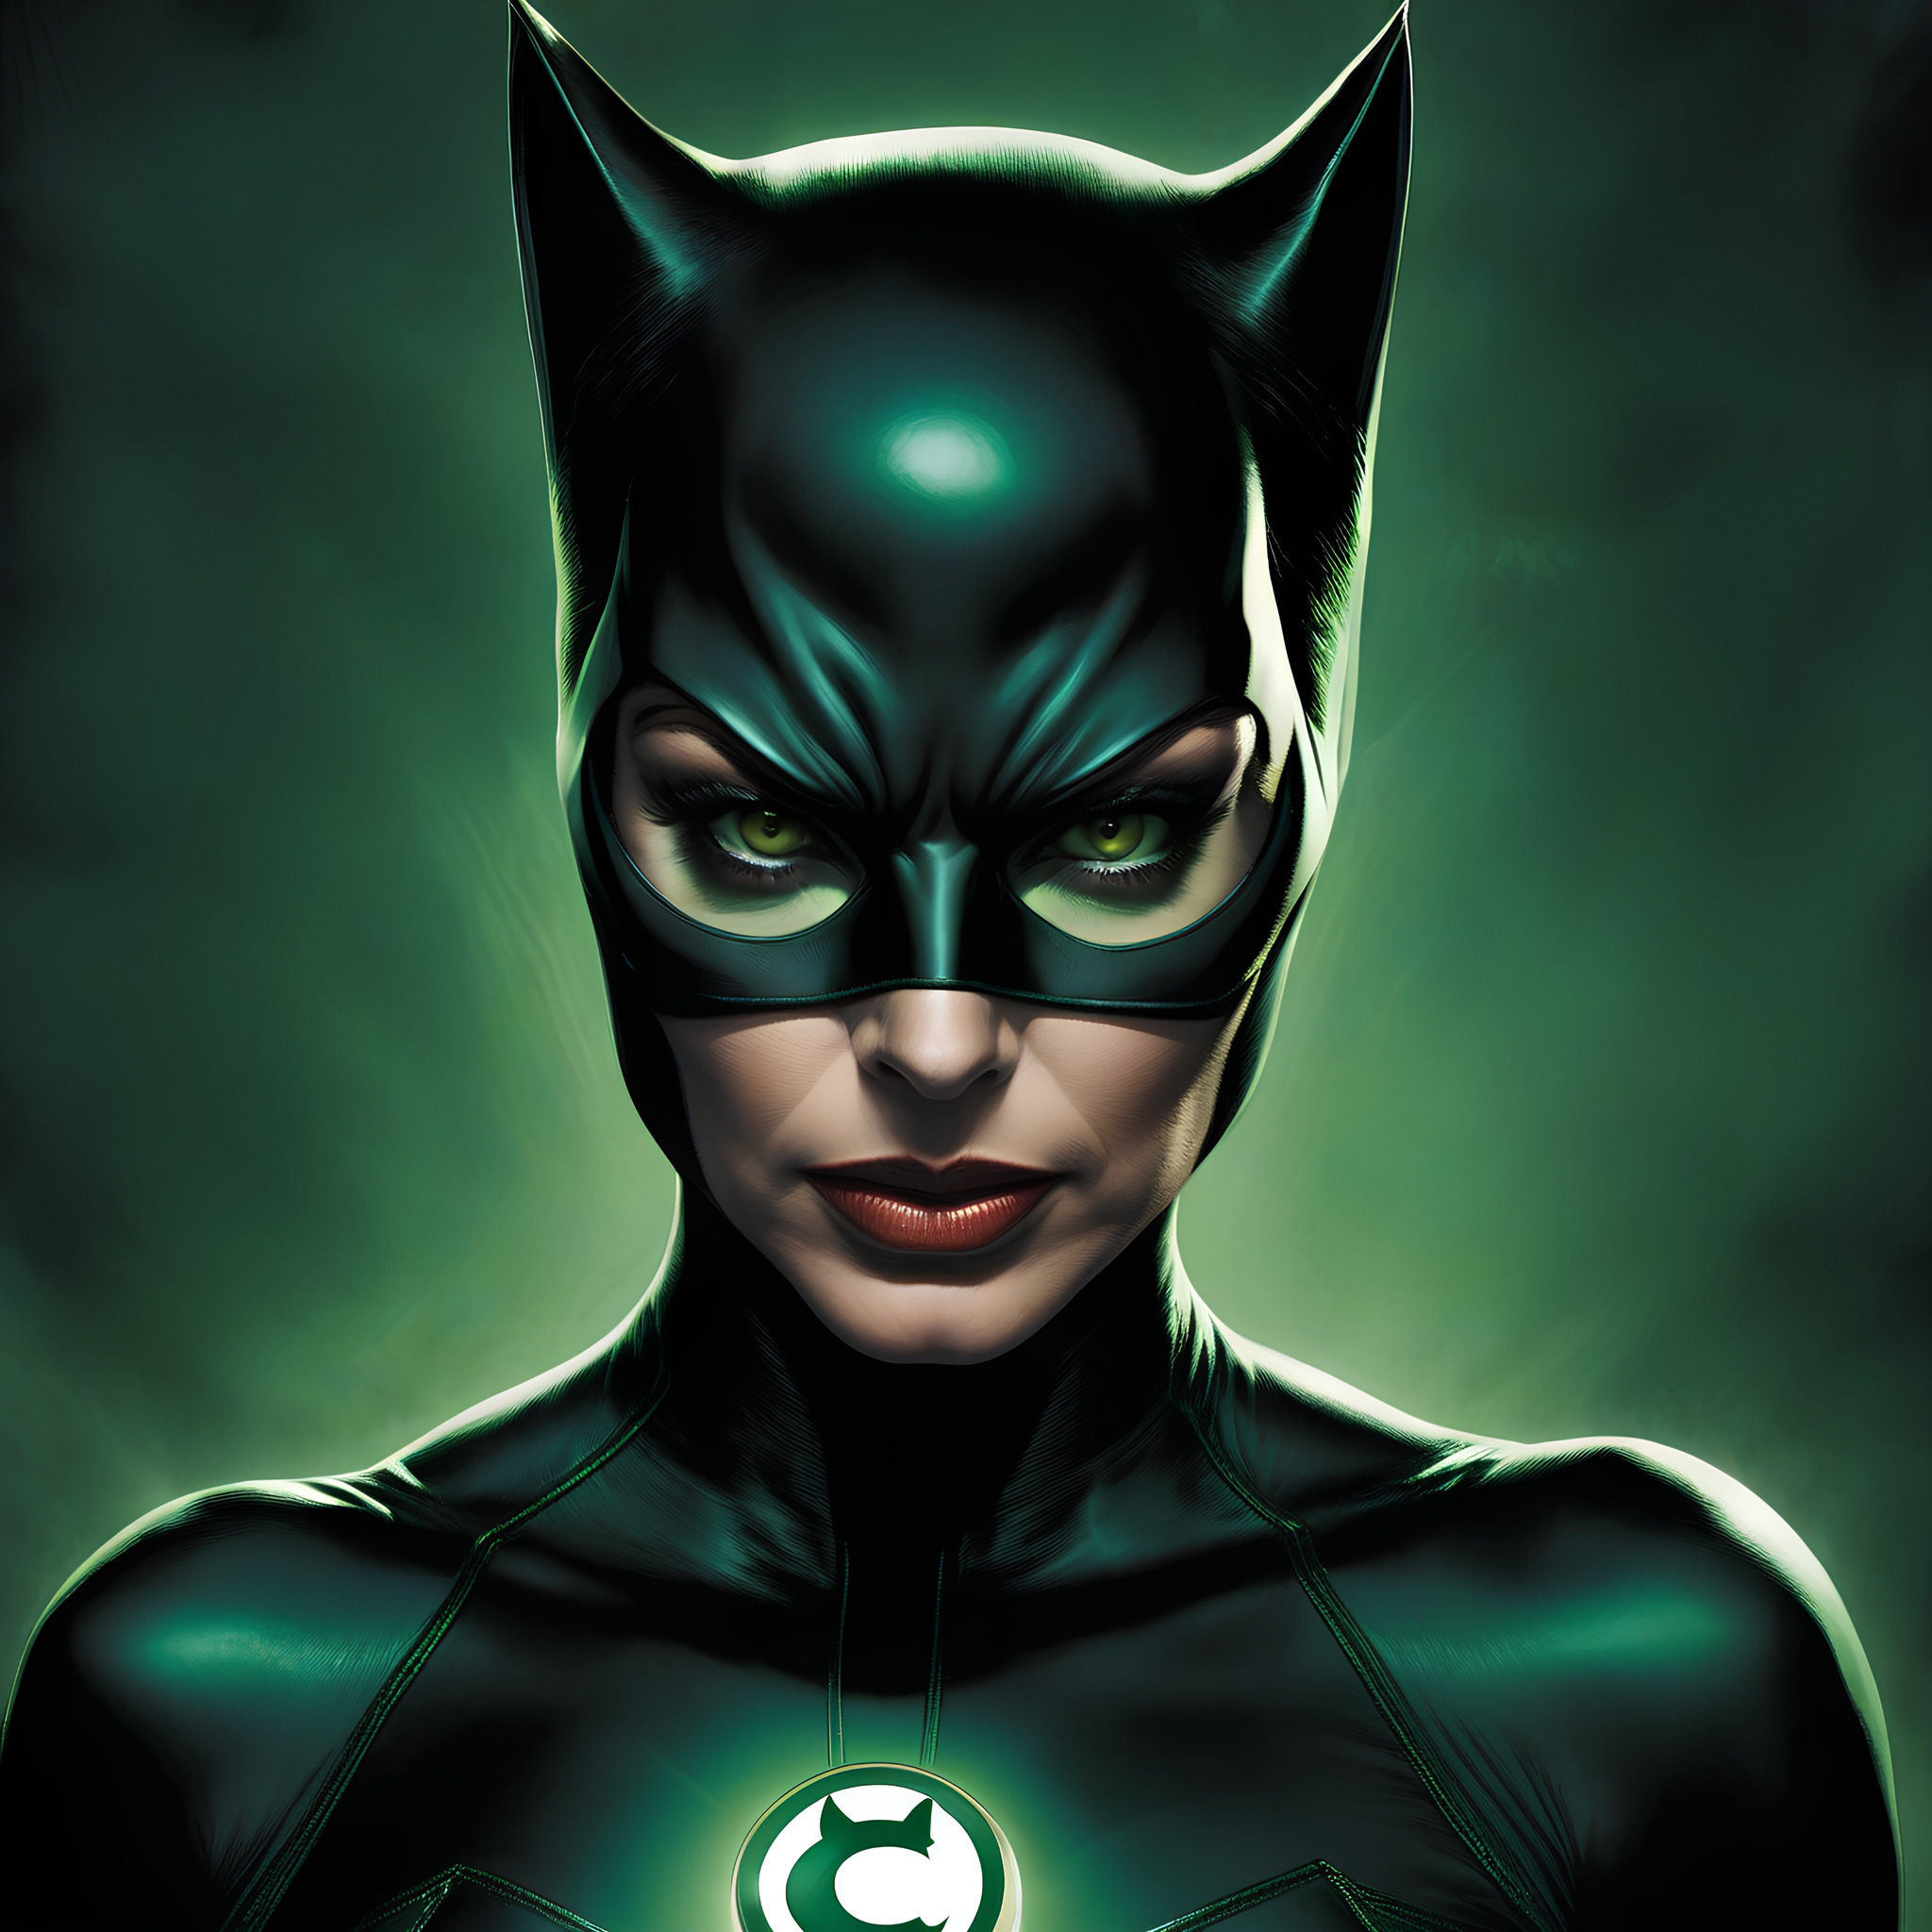 Бесплатное фото Catwoman green lantern